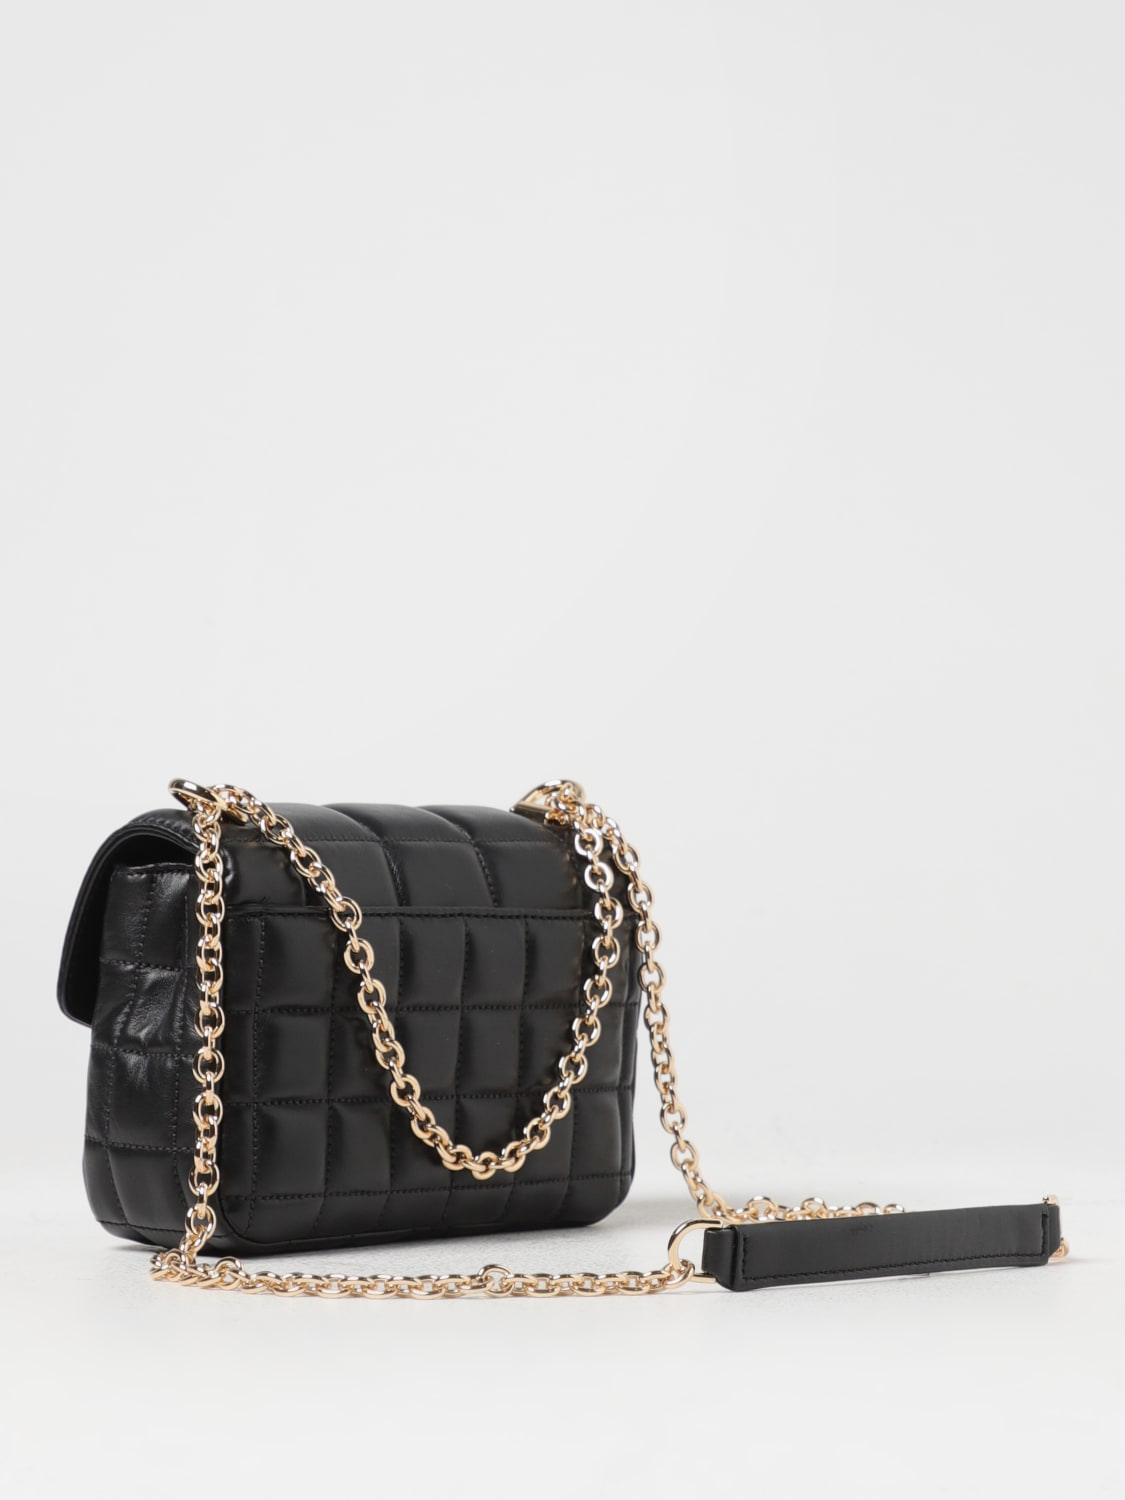 black MICHAEL KORS Women Handbags - Vestiaire Collective